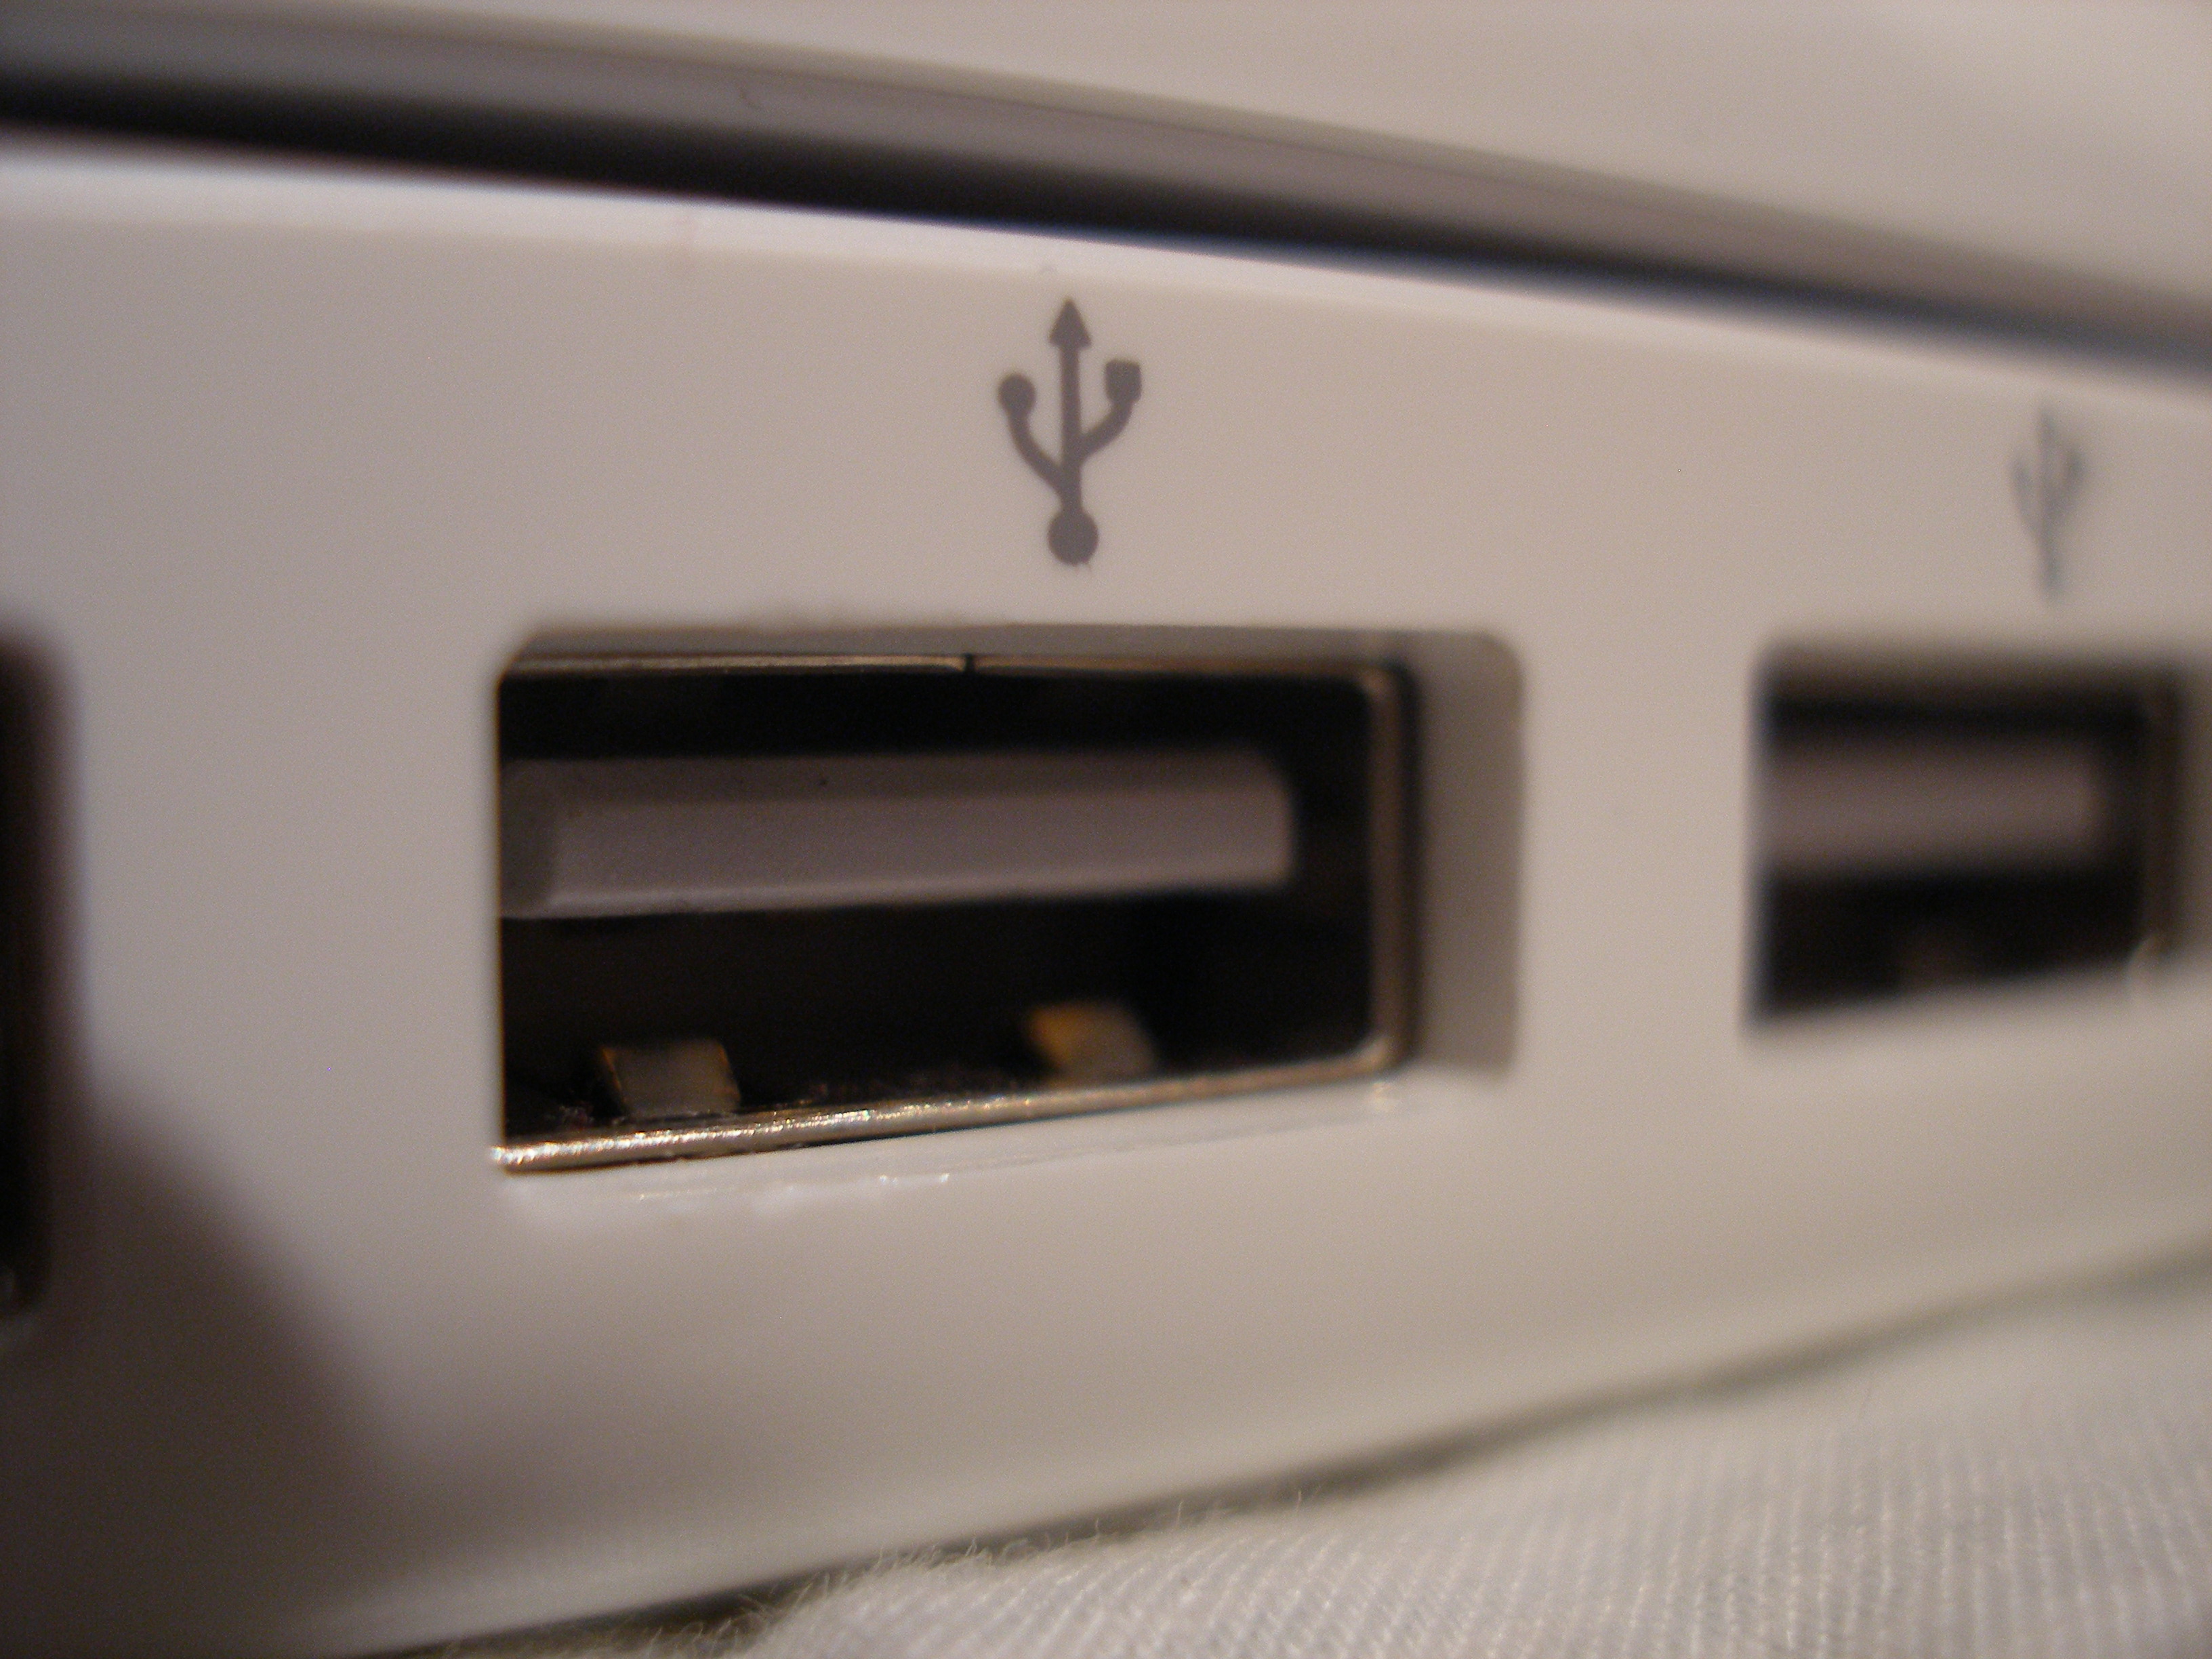 USB_Connector.jpg